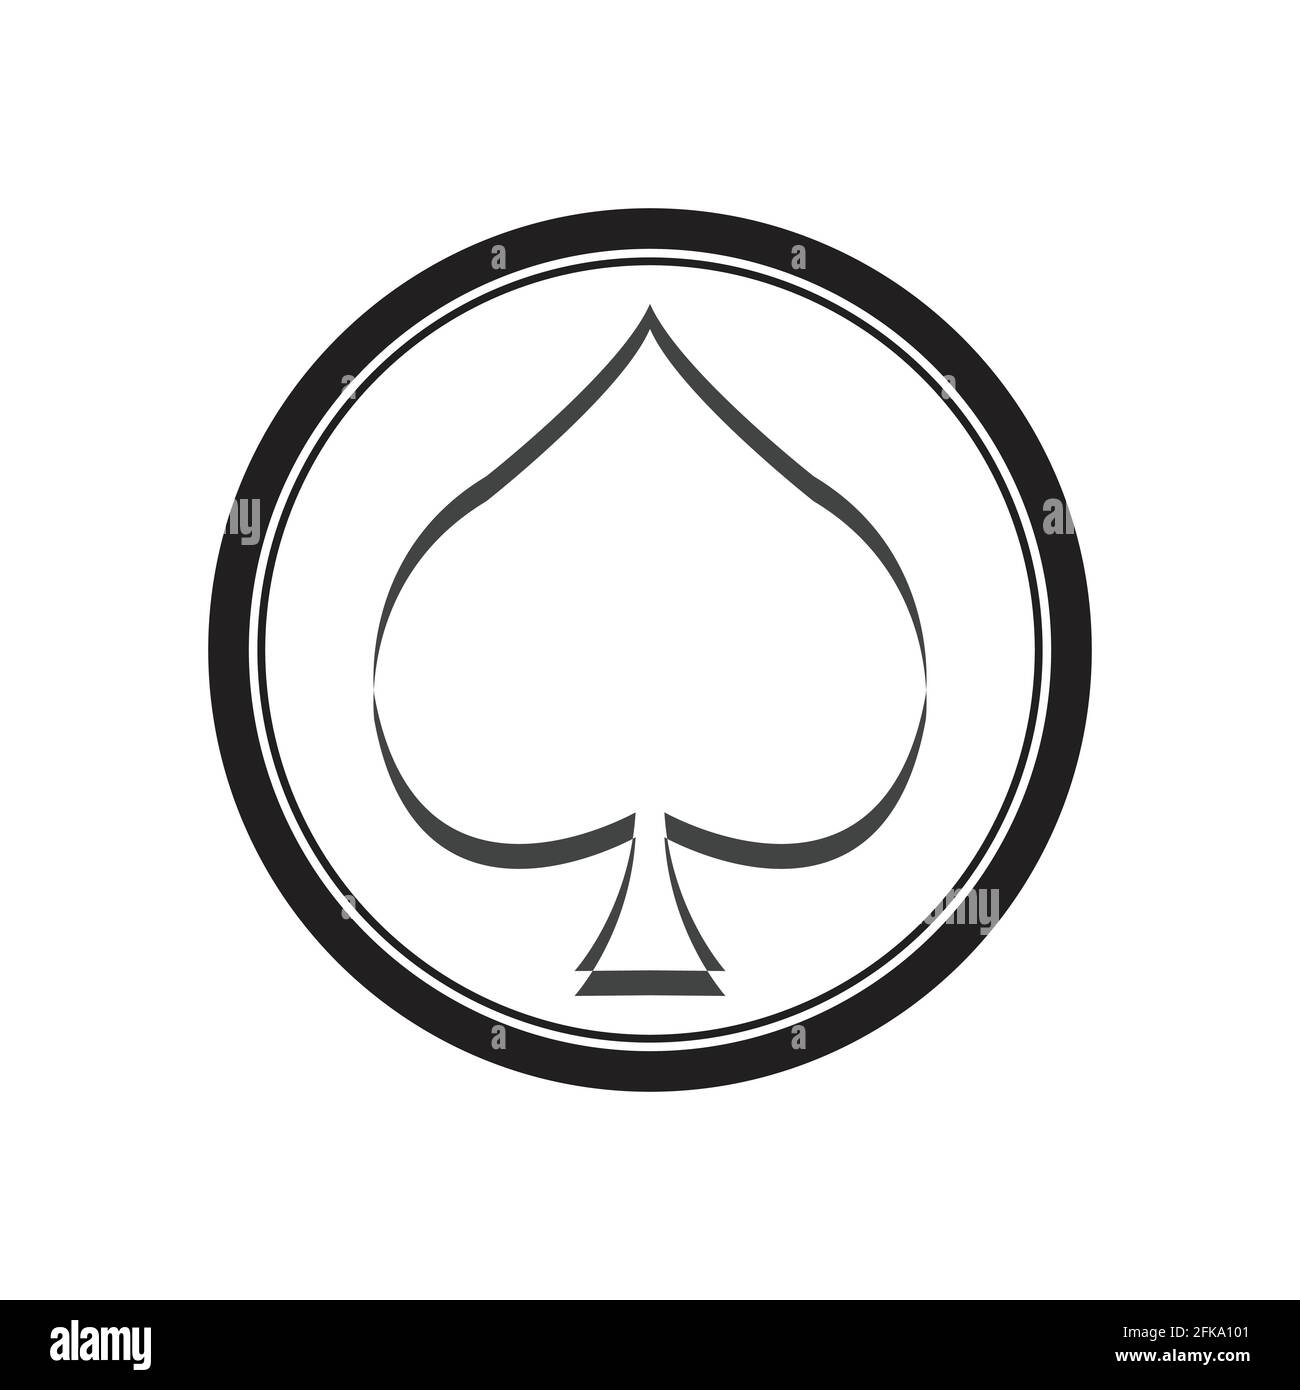 ace of spades logo vector illustration design template Stock